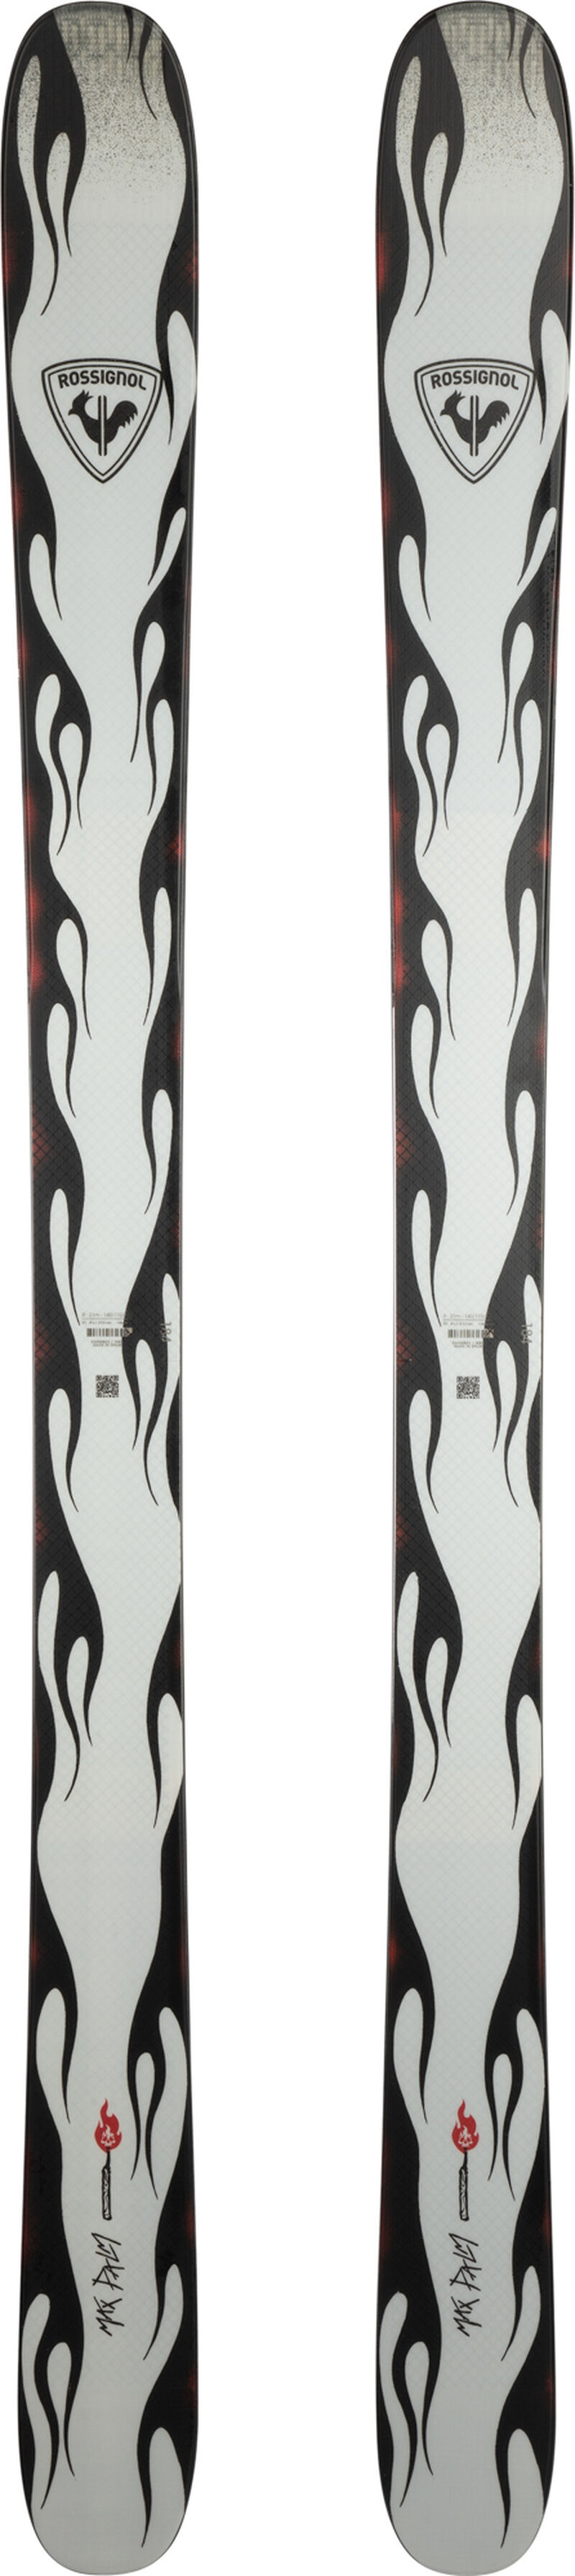 Rossignol Skis de freeride homme SENDER FREE 110 OPEN Max Palm Limited edition multicolor